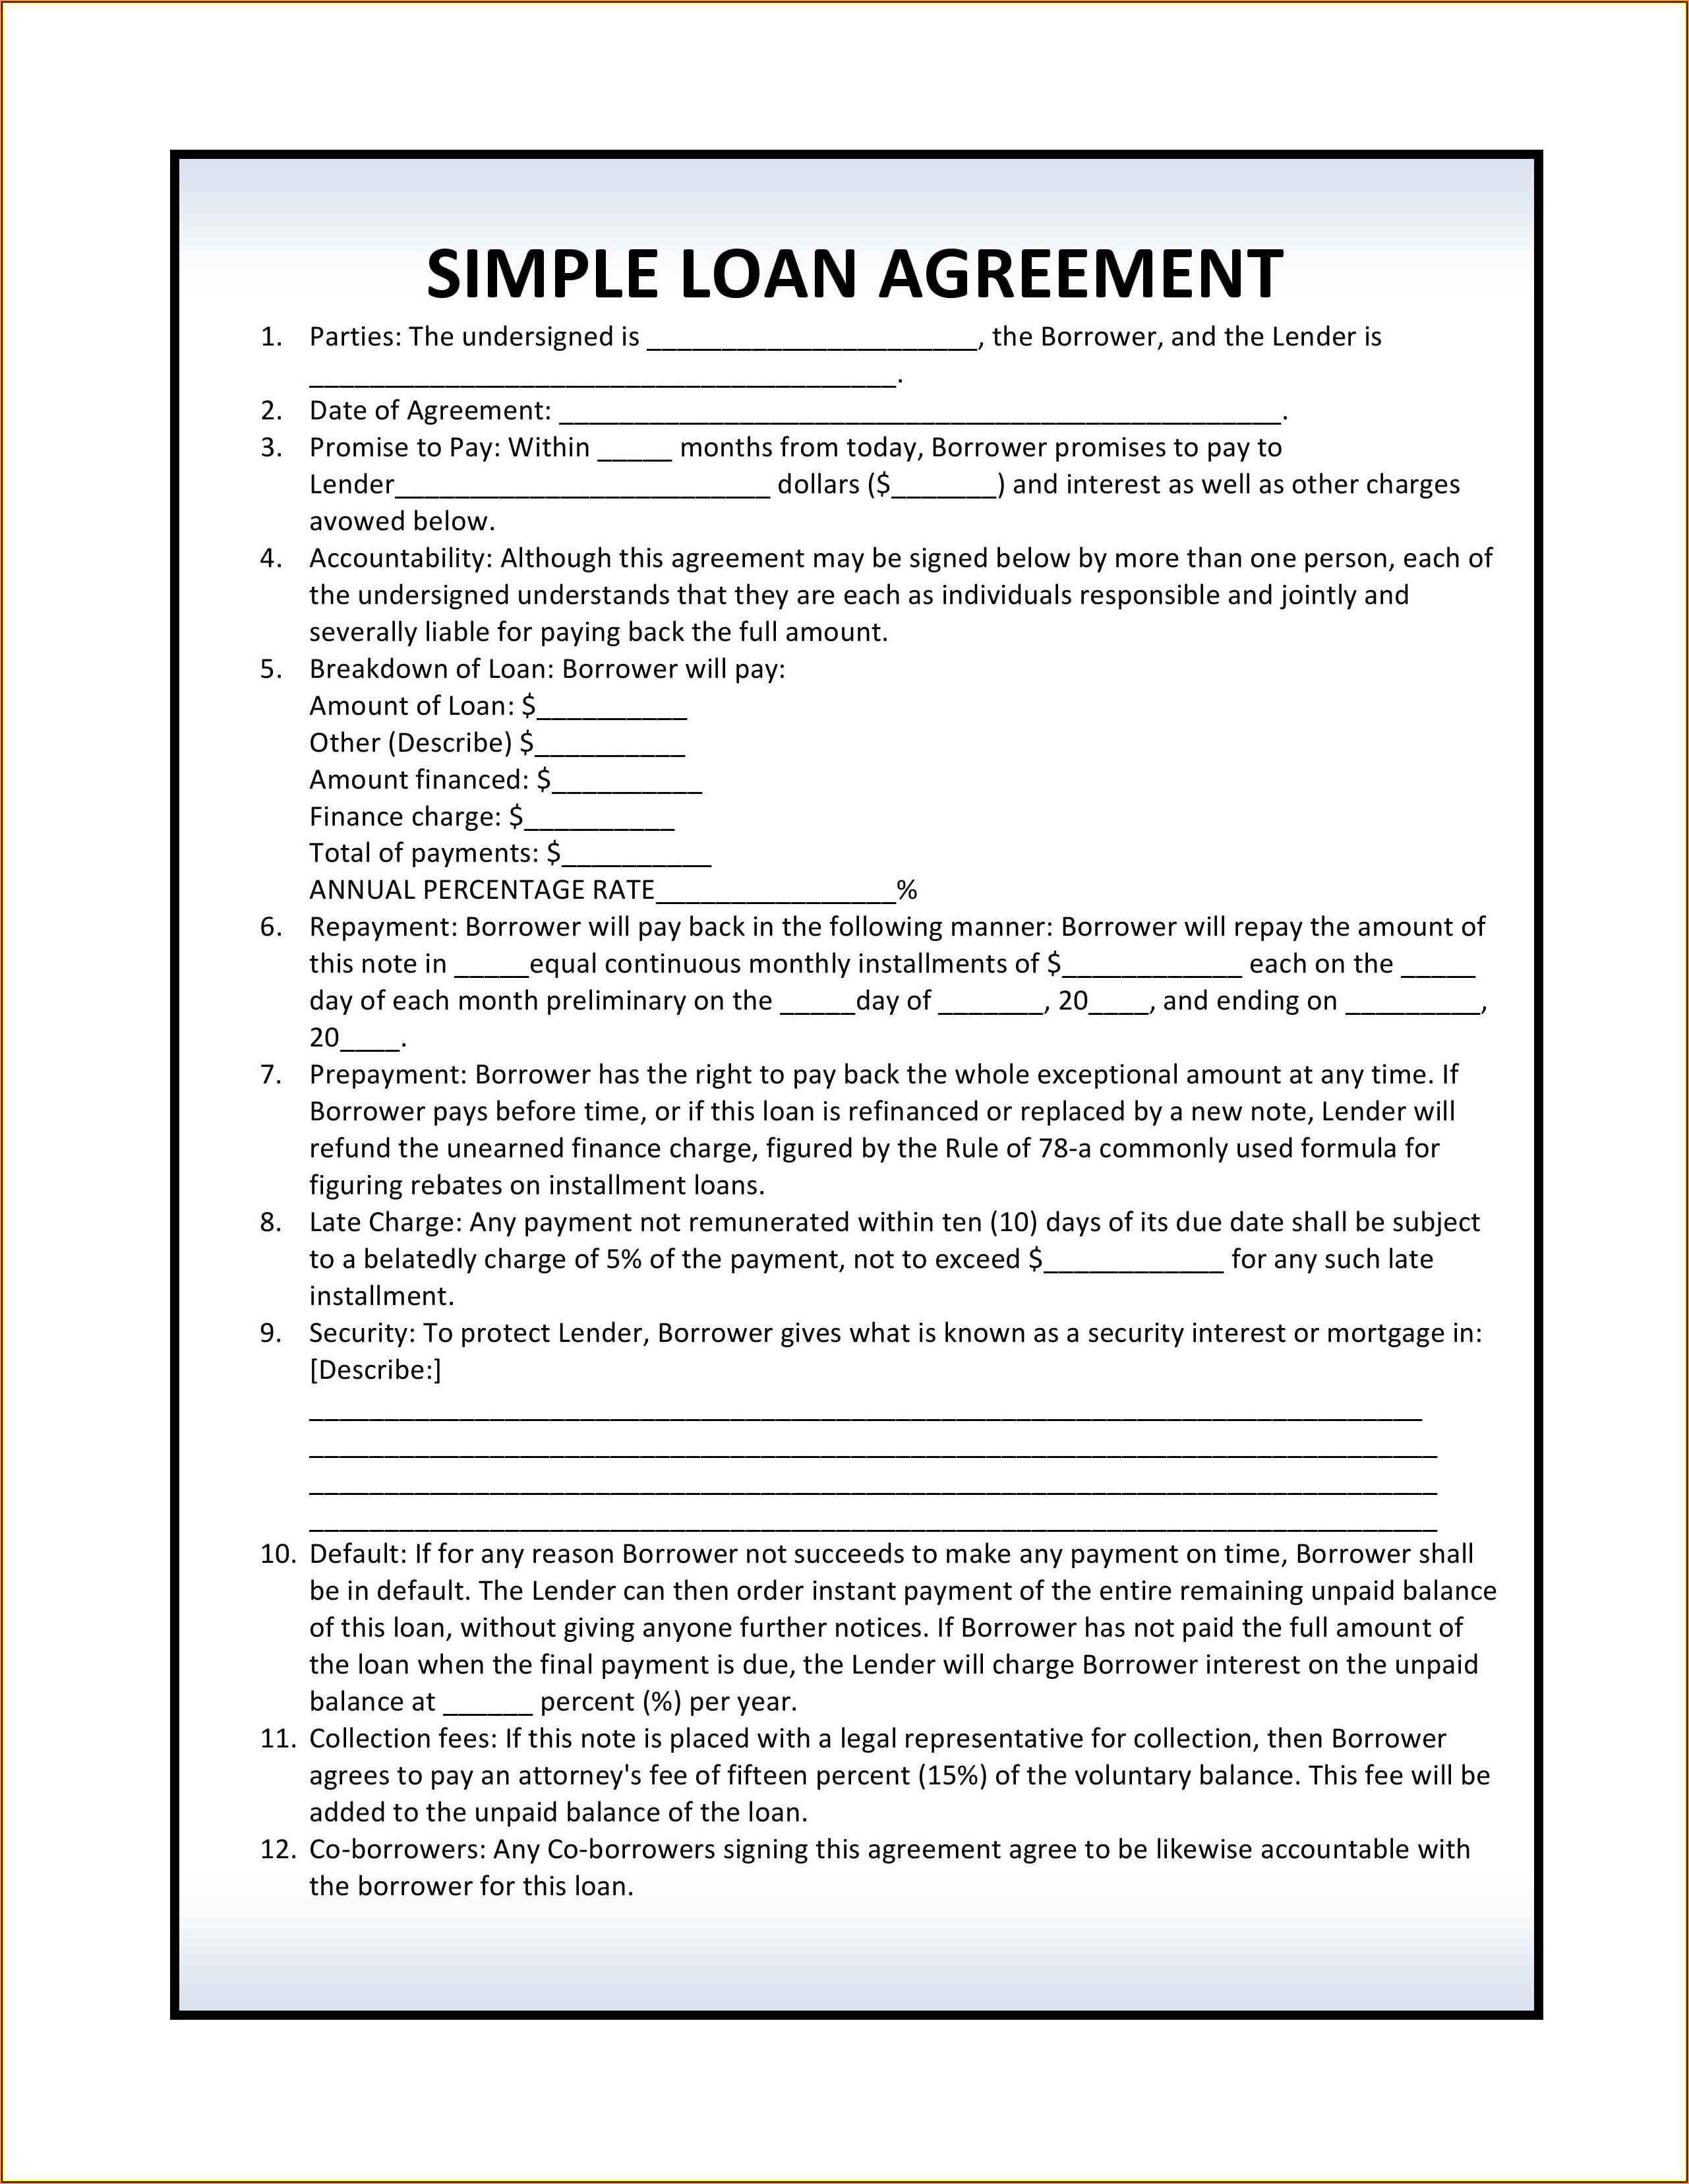 Simple Loan Agreement Form